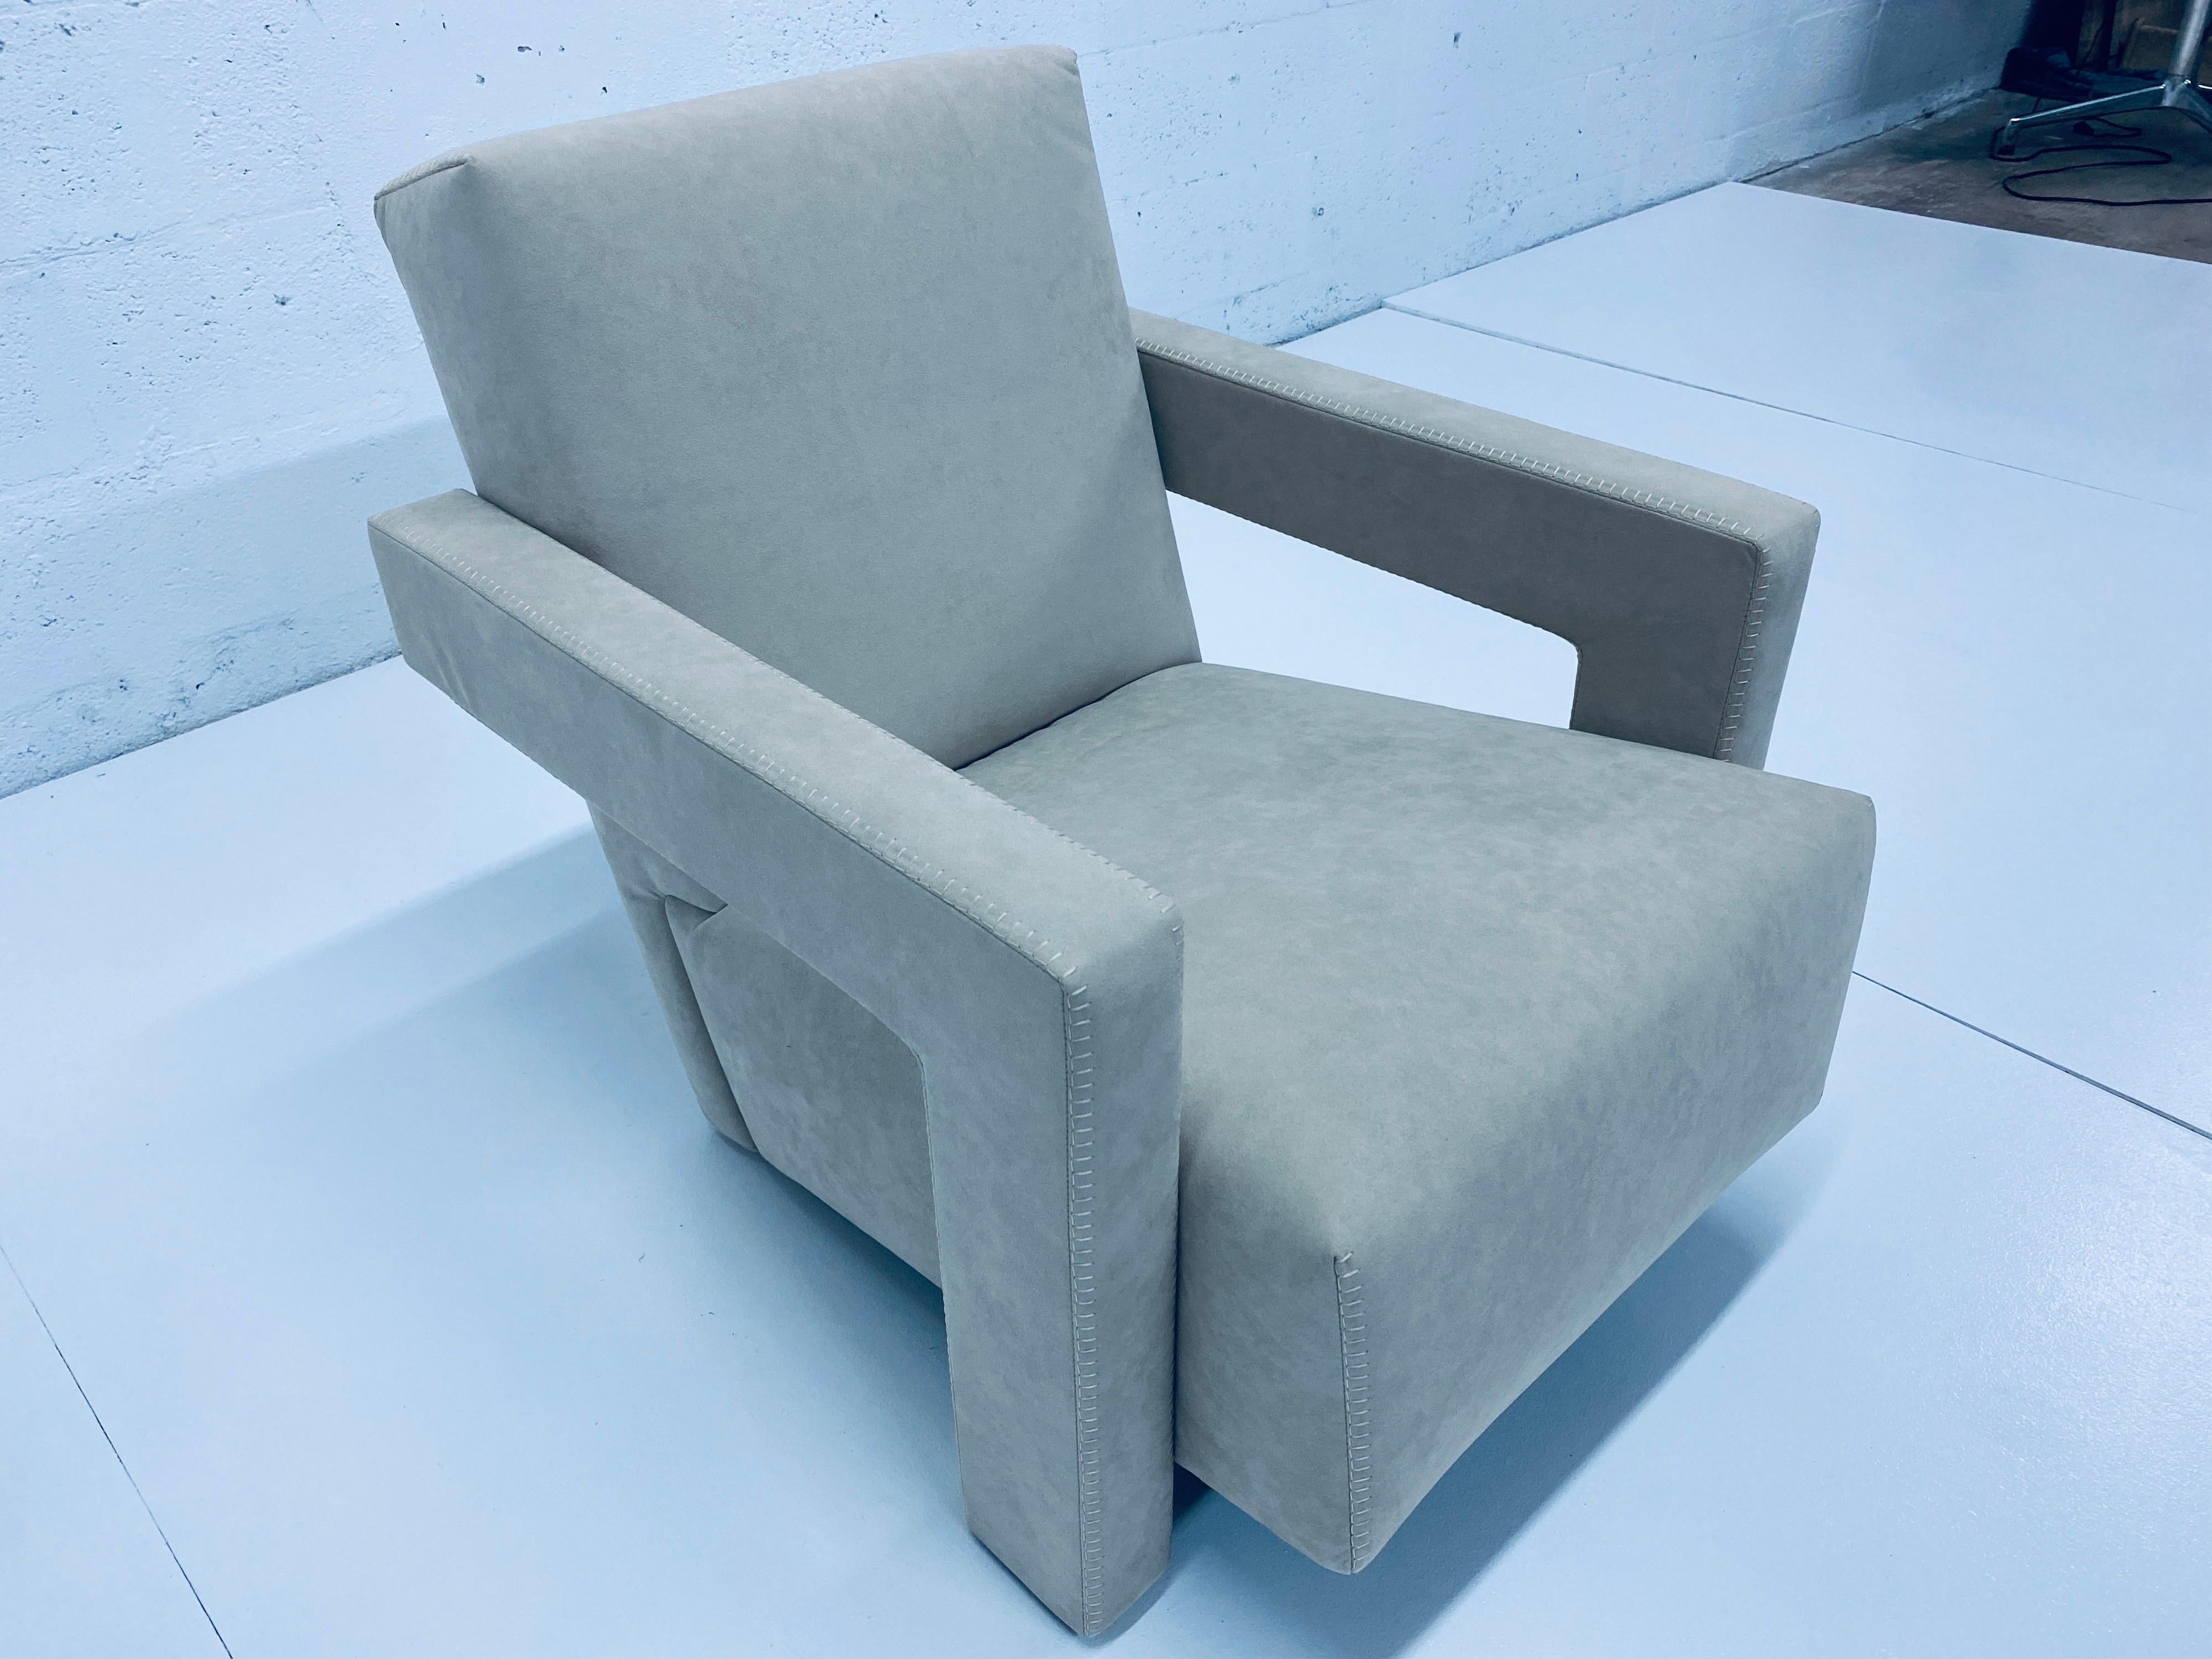 Gerrit Rietveld “Utrecht” Lounge Chair for Cassina 1